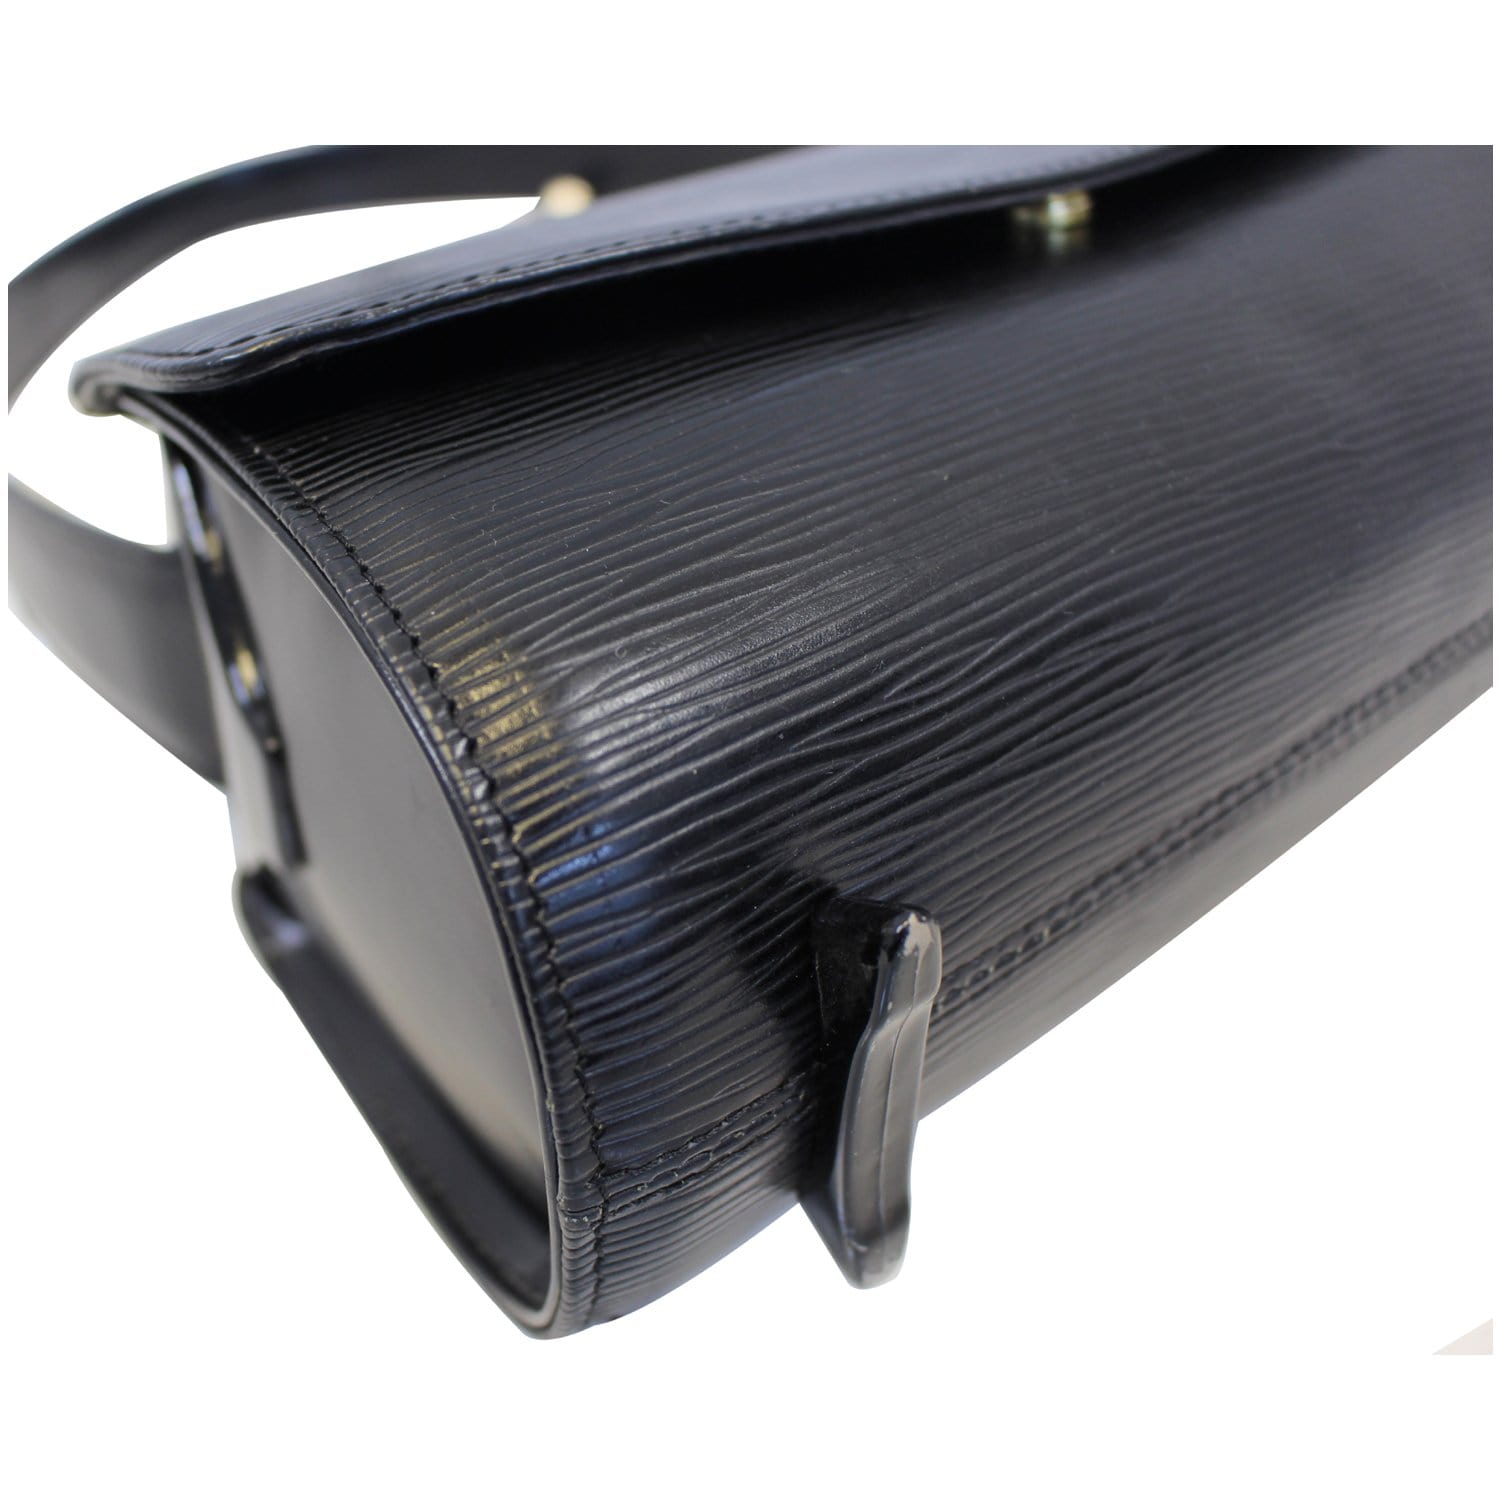 LOUIS VUITTON EPI LEATHER NOCTURNE SHOULDER BAG, black leather with dark  grey suede lining, detachable handle, magnetic flap closure, bottom feet,  26cm x 12cm H x 10cm.